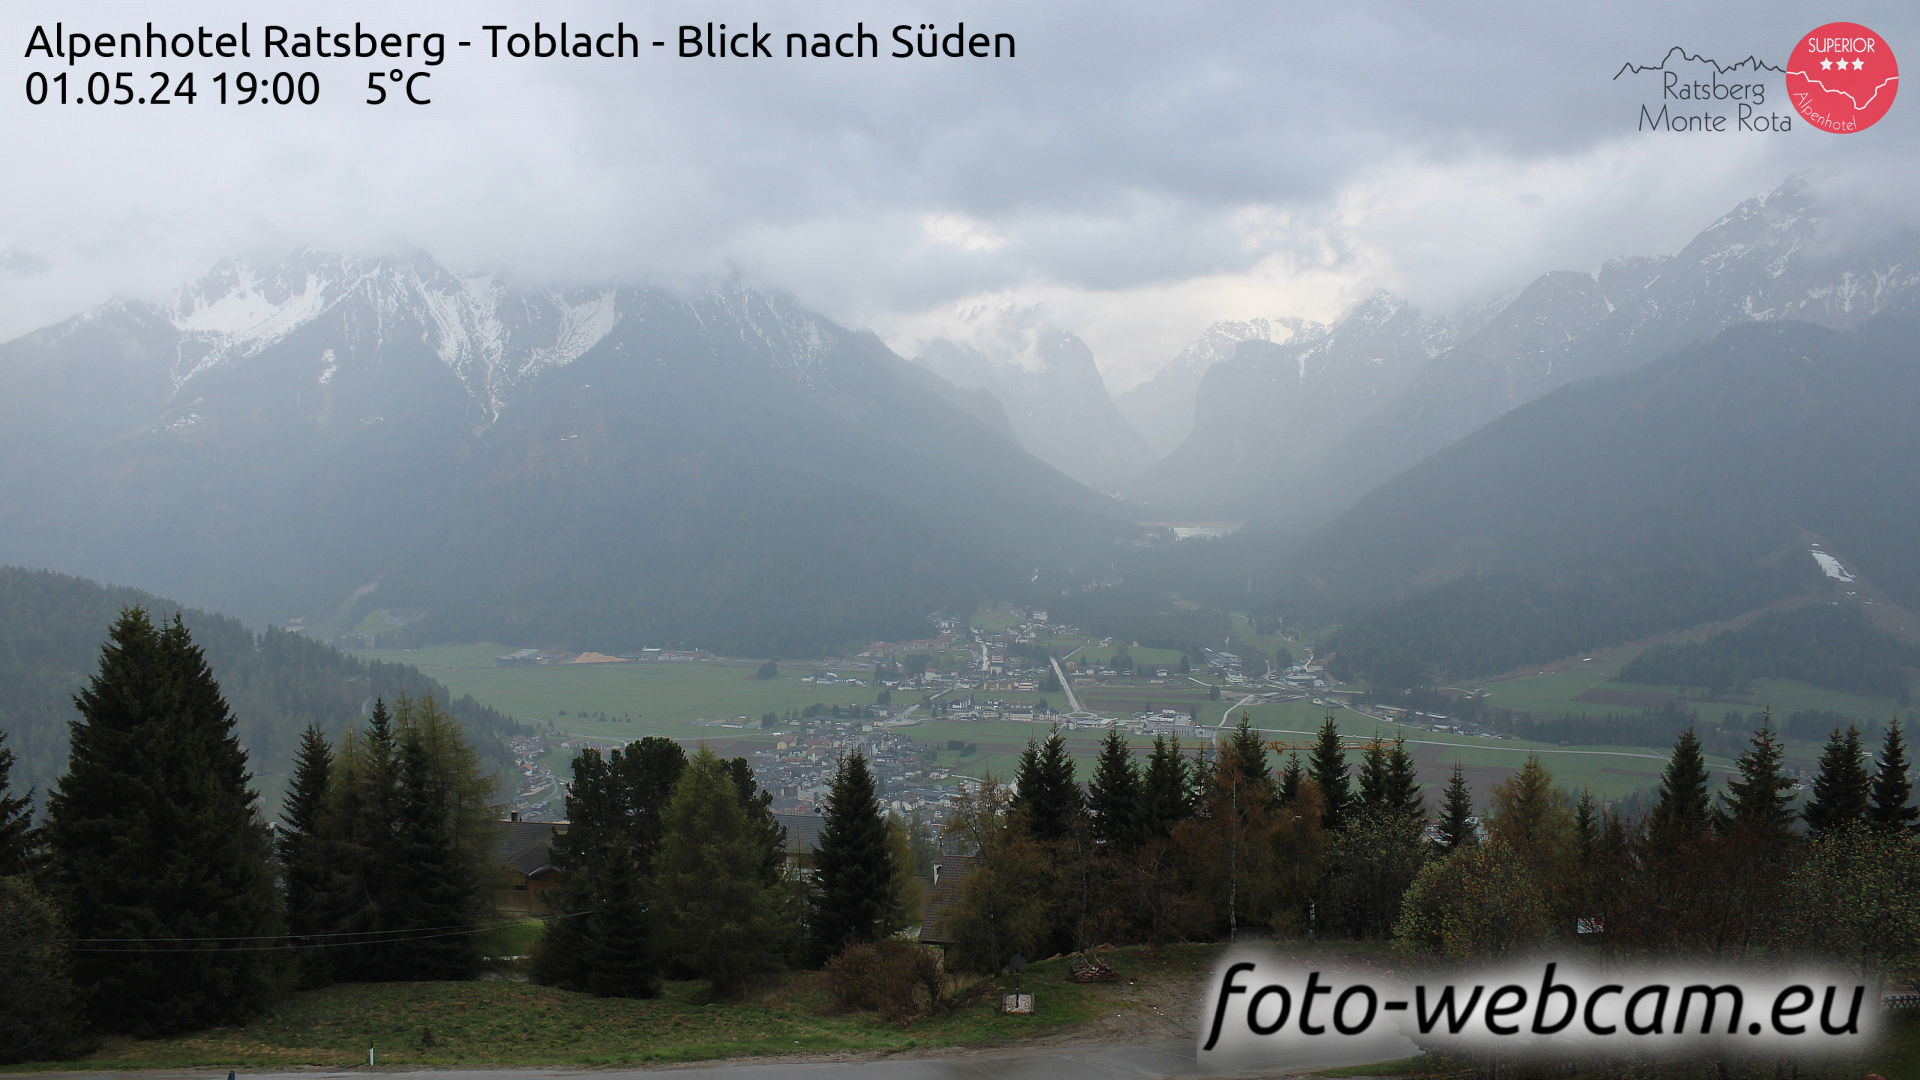 Toblach (Dolomiten) Fr. 19:04